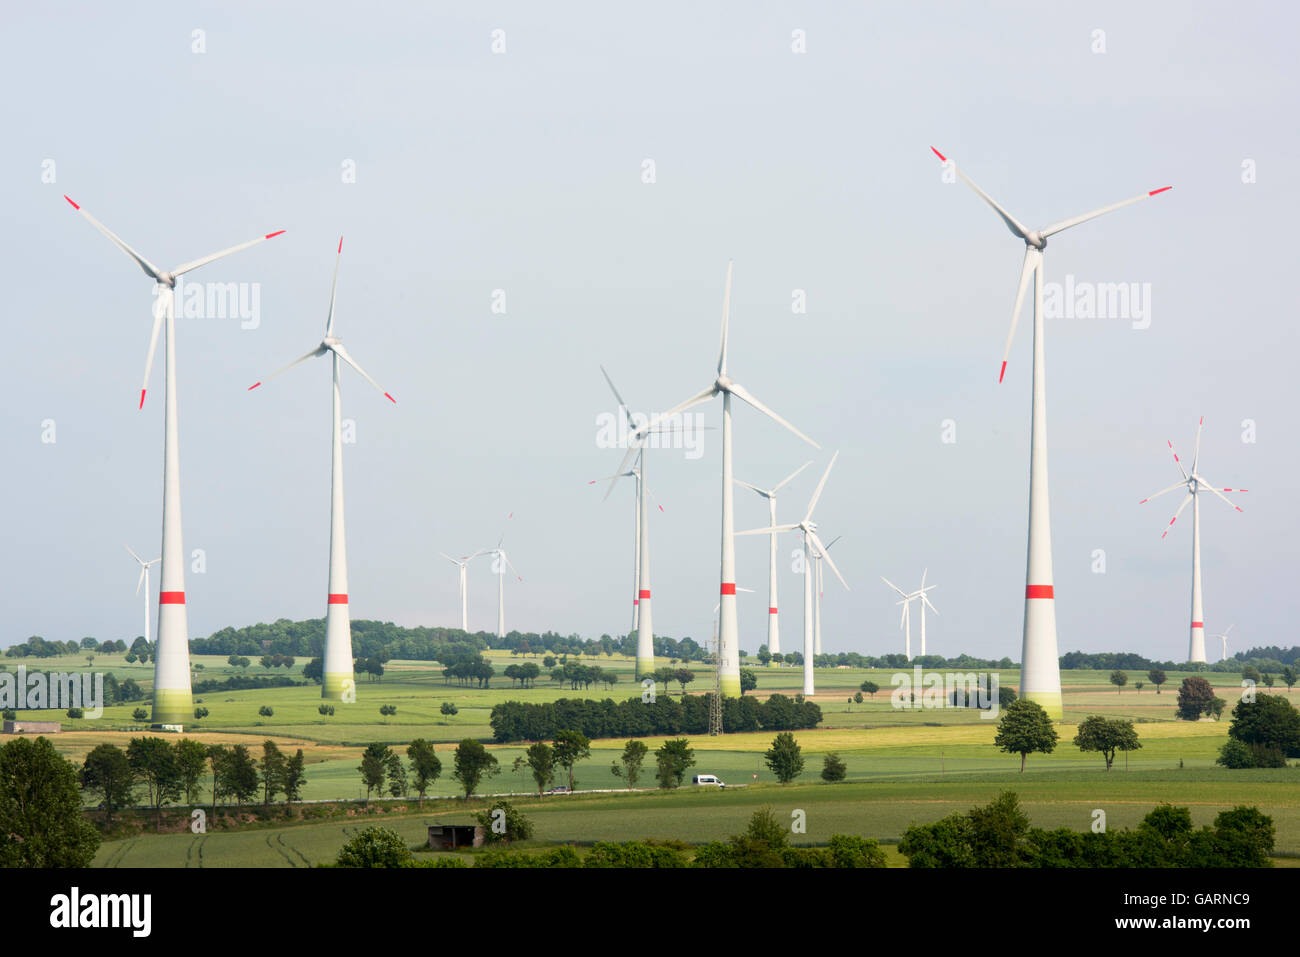 Deutschland, Nordrhein-Westfalen, Paderborn-Benhausen, parque eólico instalado Foto de stock